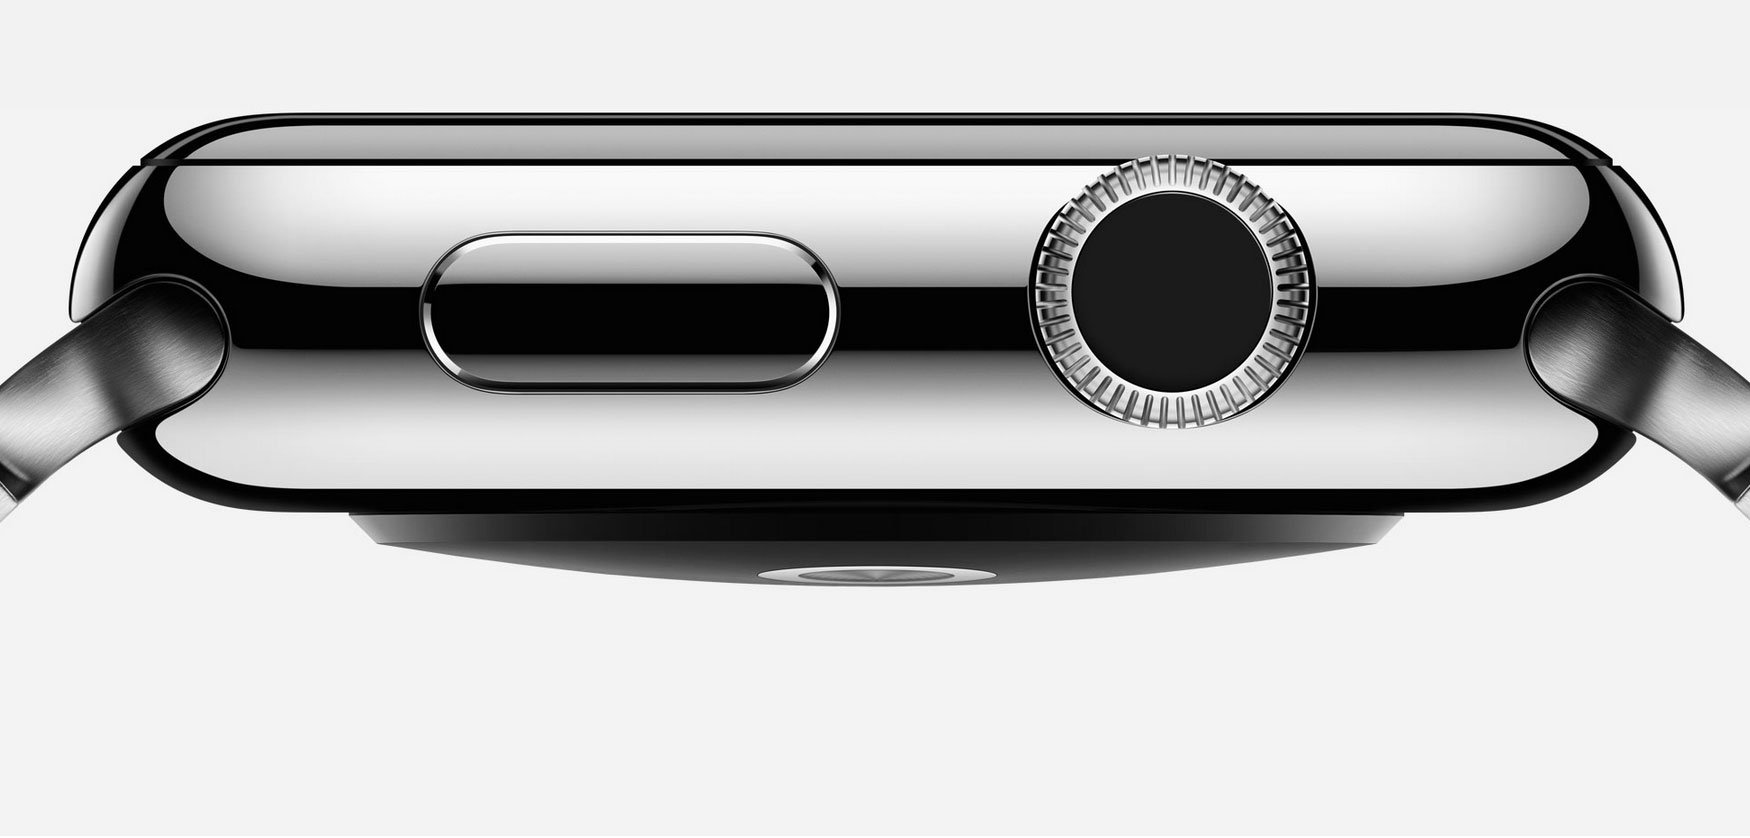 Wann kommt die Apple Watch: Apple Uhr Release im Frühling 2015! 7